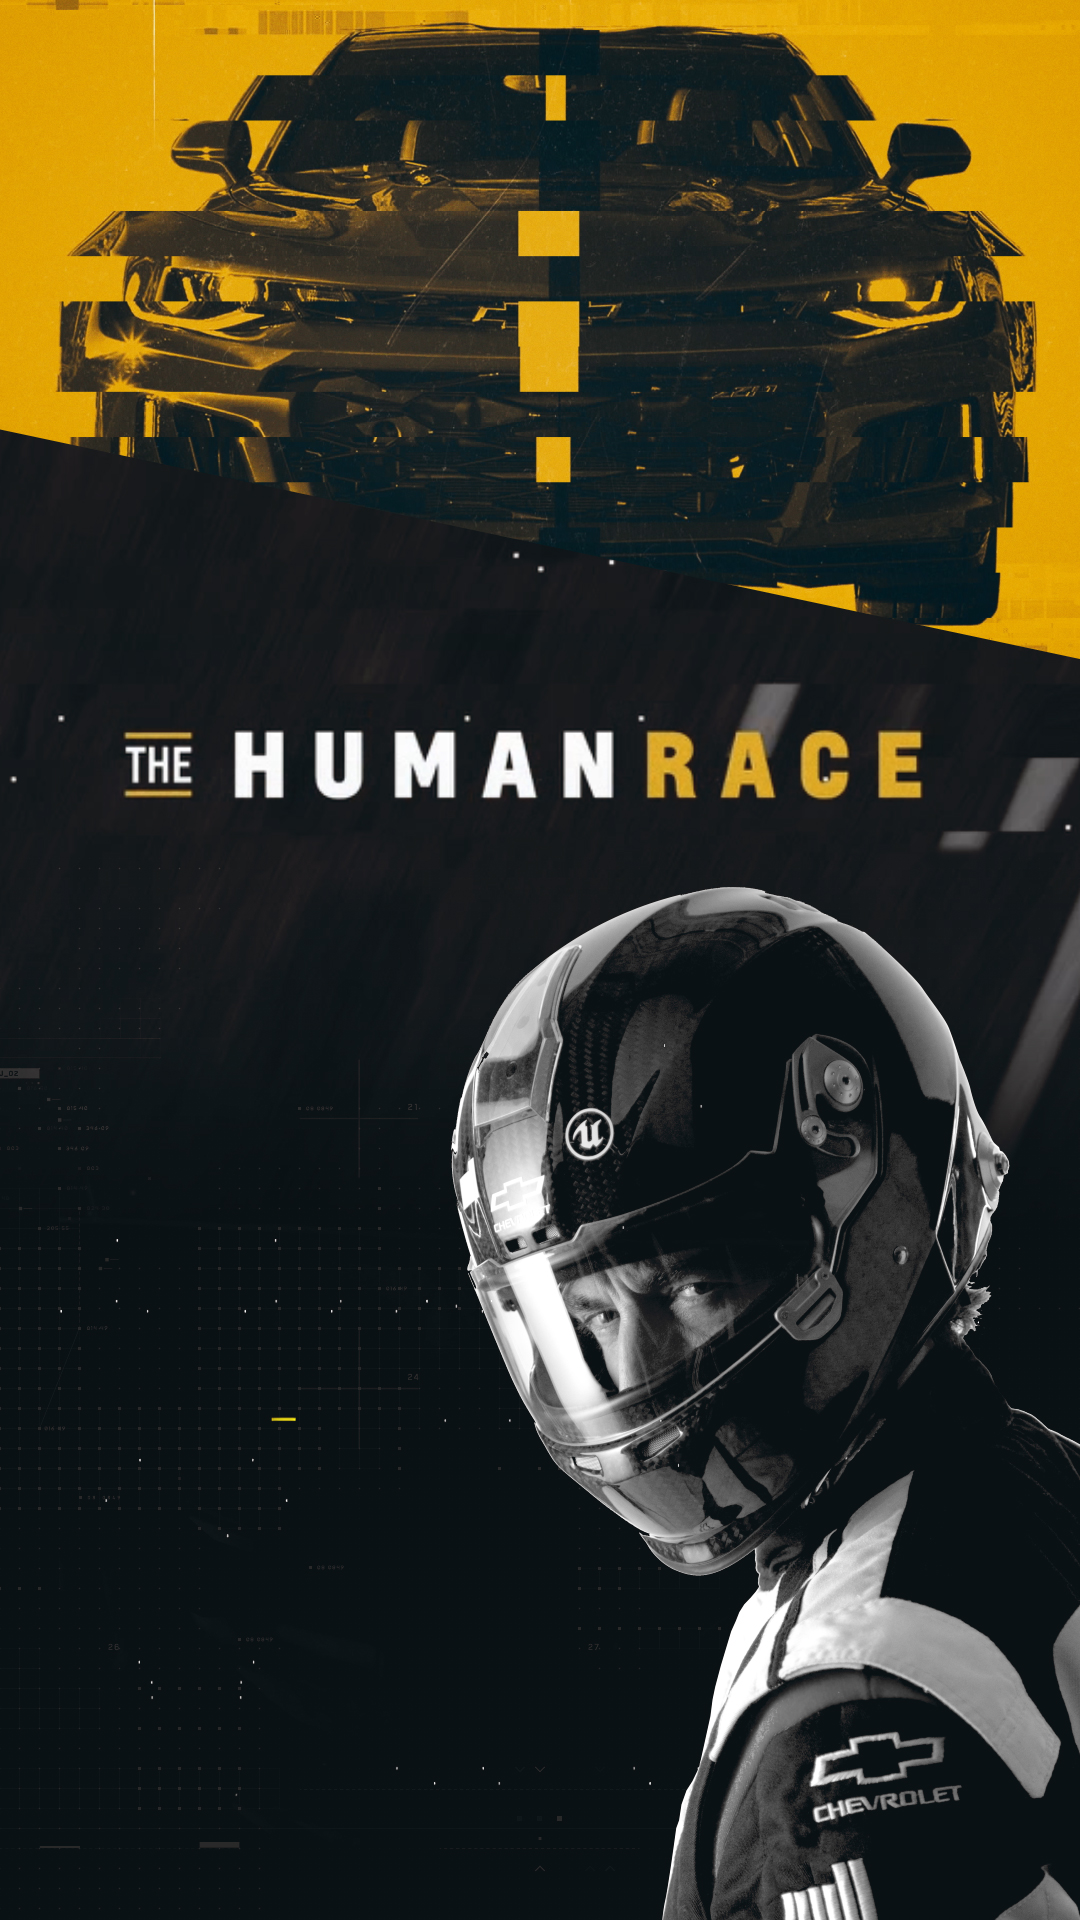 Chevrolet: The Human Race